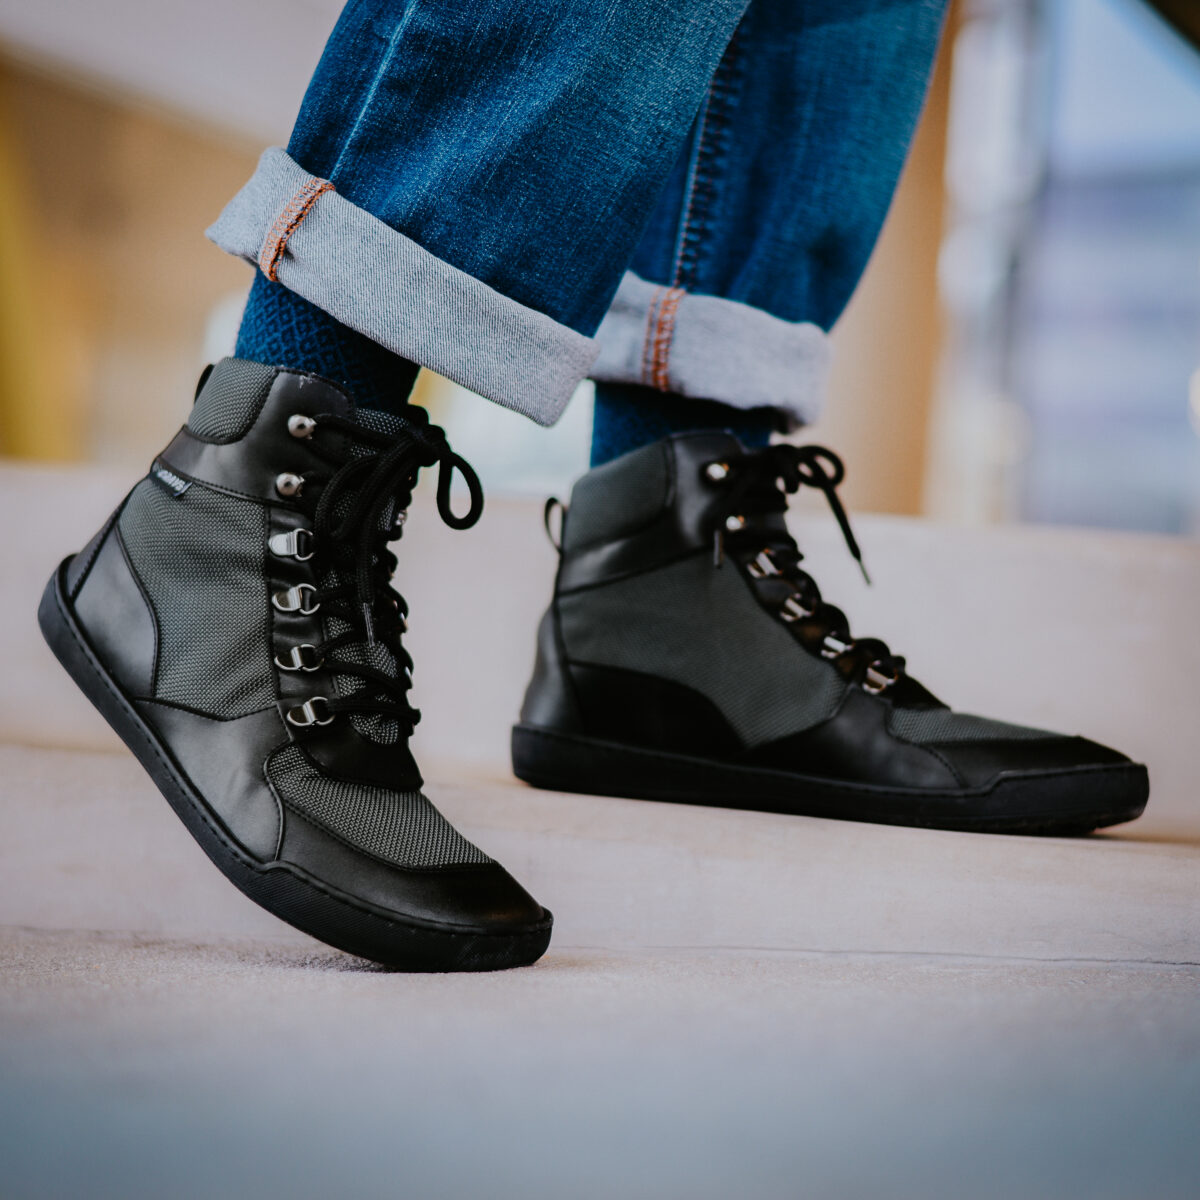 CRAVE Shoes – Comfortable urban barefoot shoes